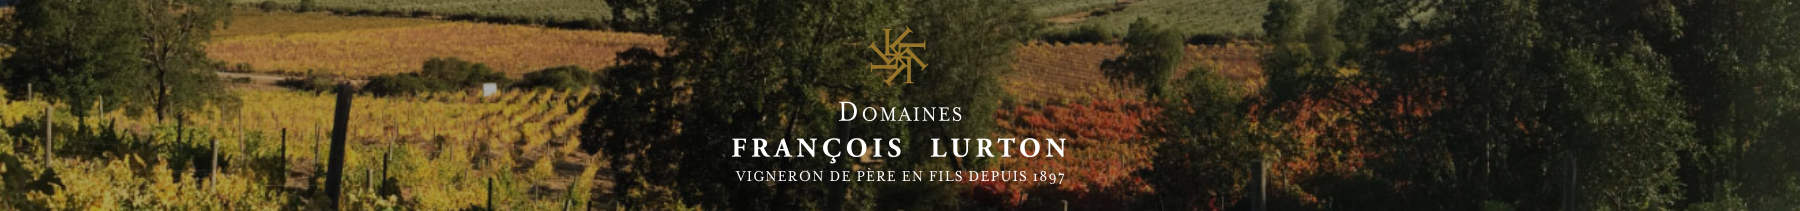 Domaines François Lurton